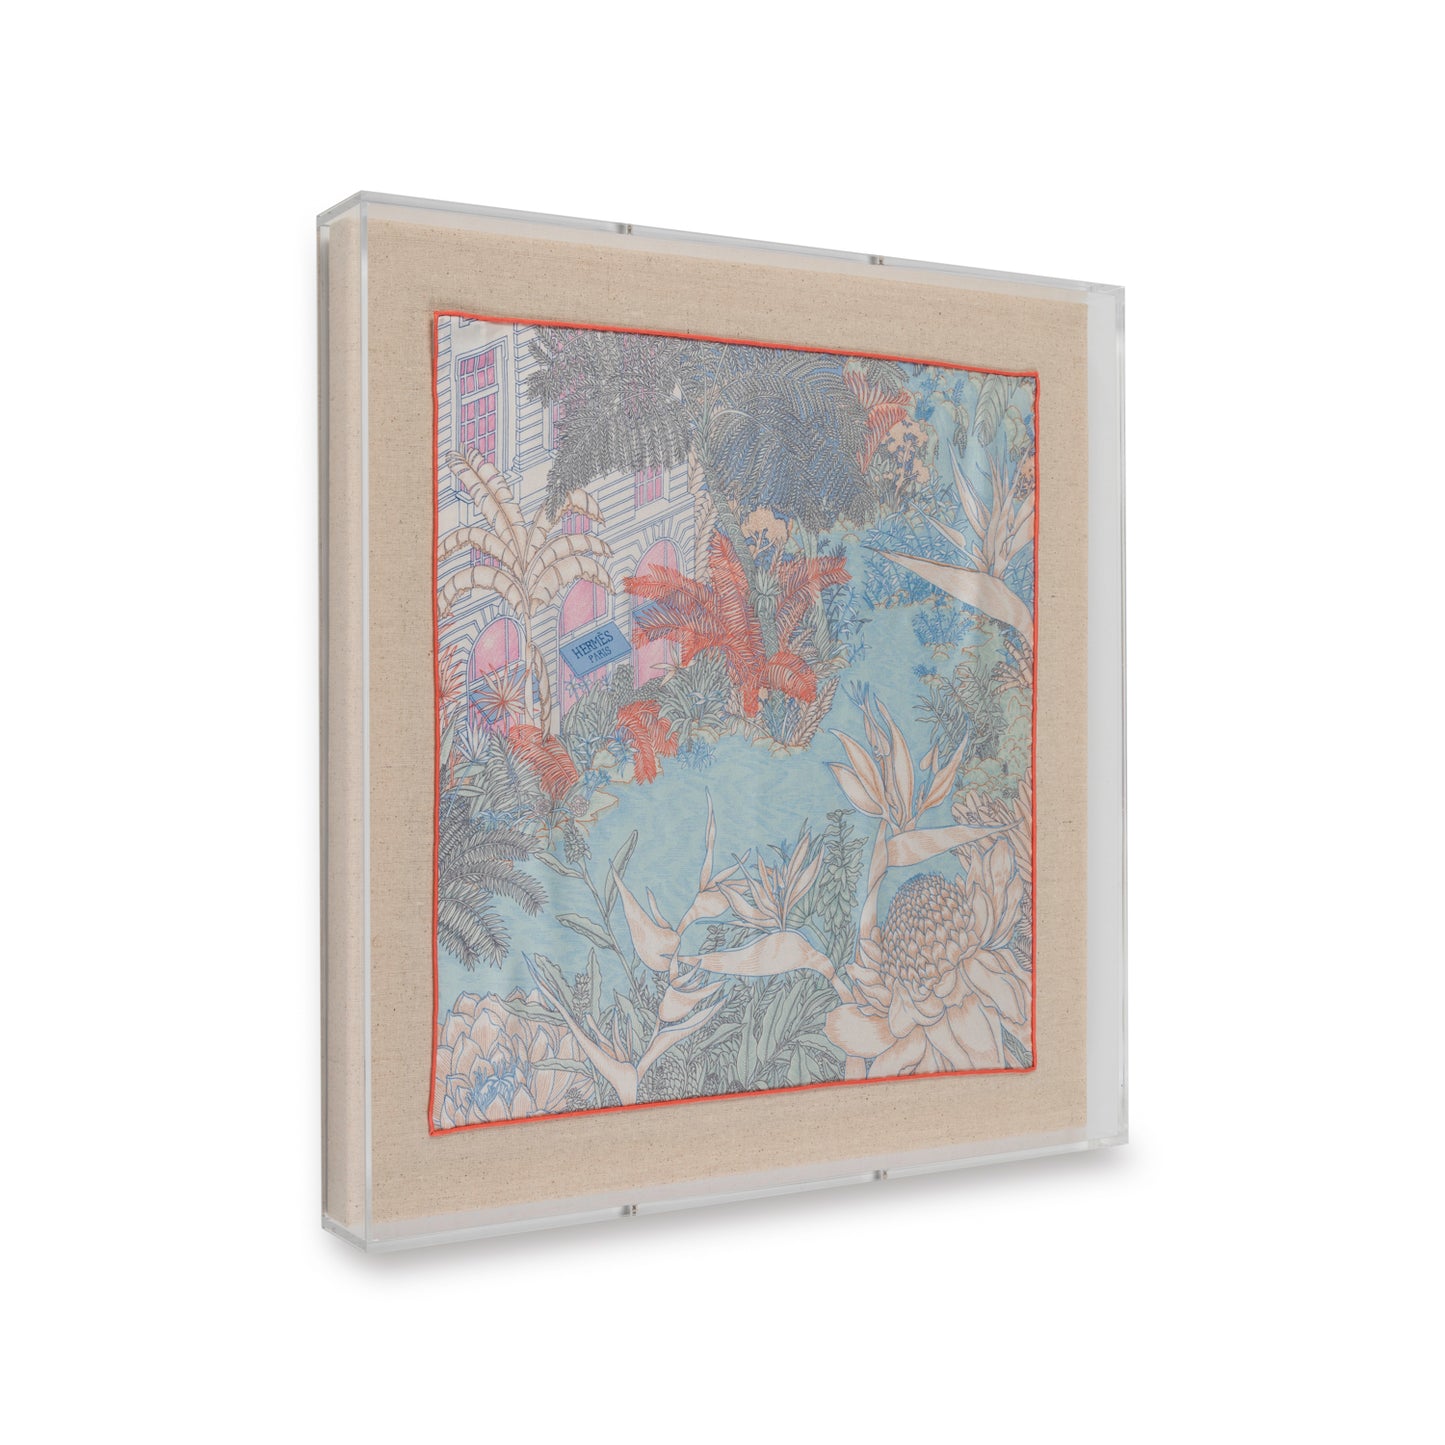 Framed Hermés Faubourg Tropical Bleu Ciel Red Fronds Silk Scarf in a 20x20x2" Shadowbox